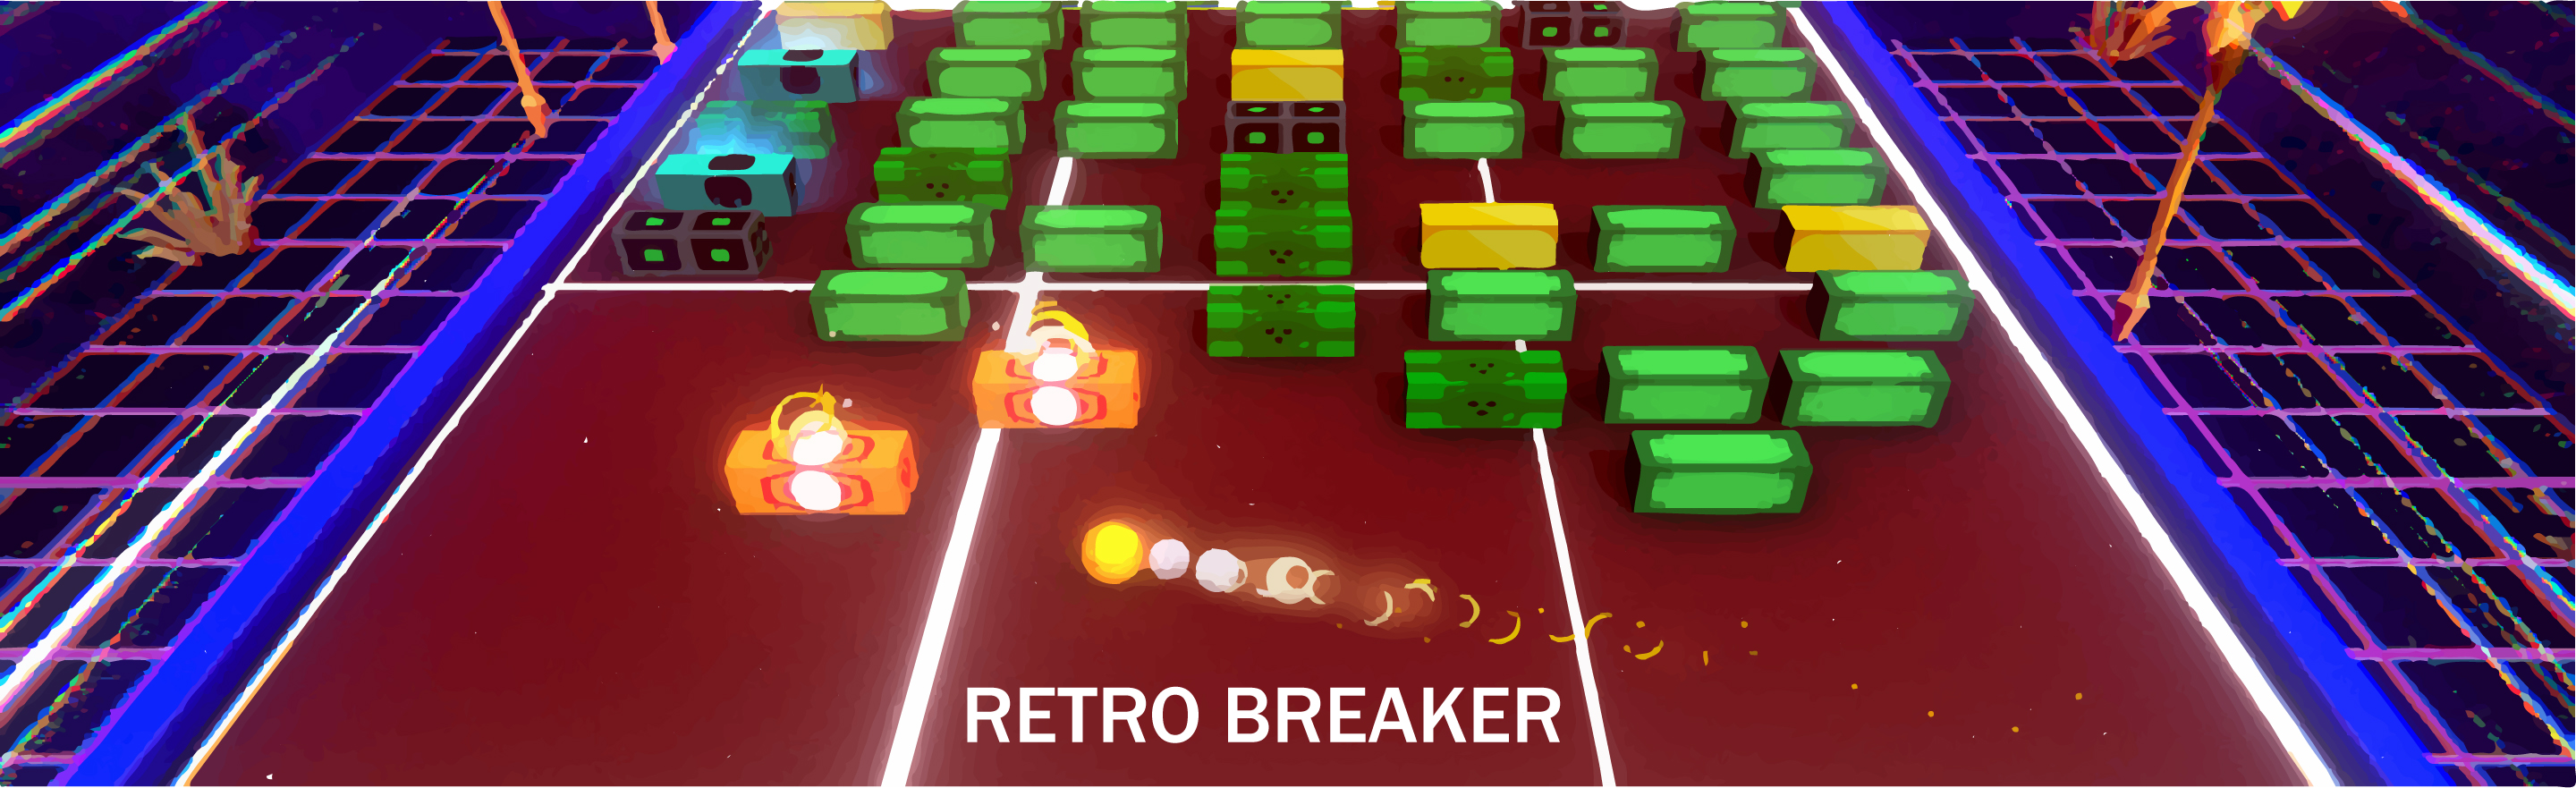 Retro Breaker